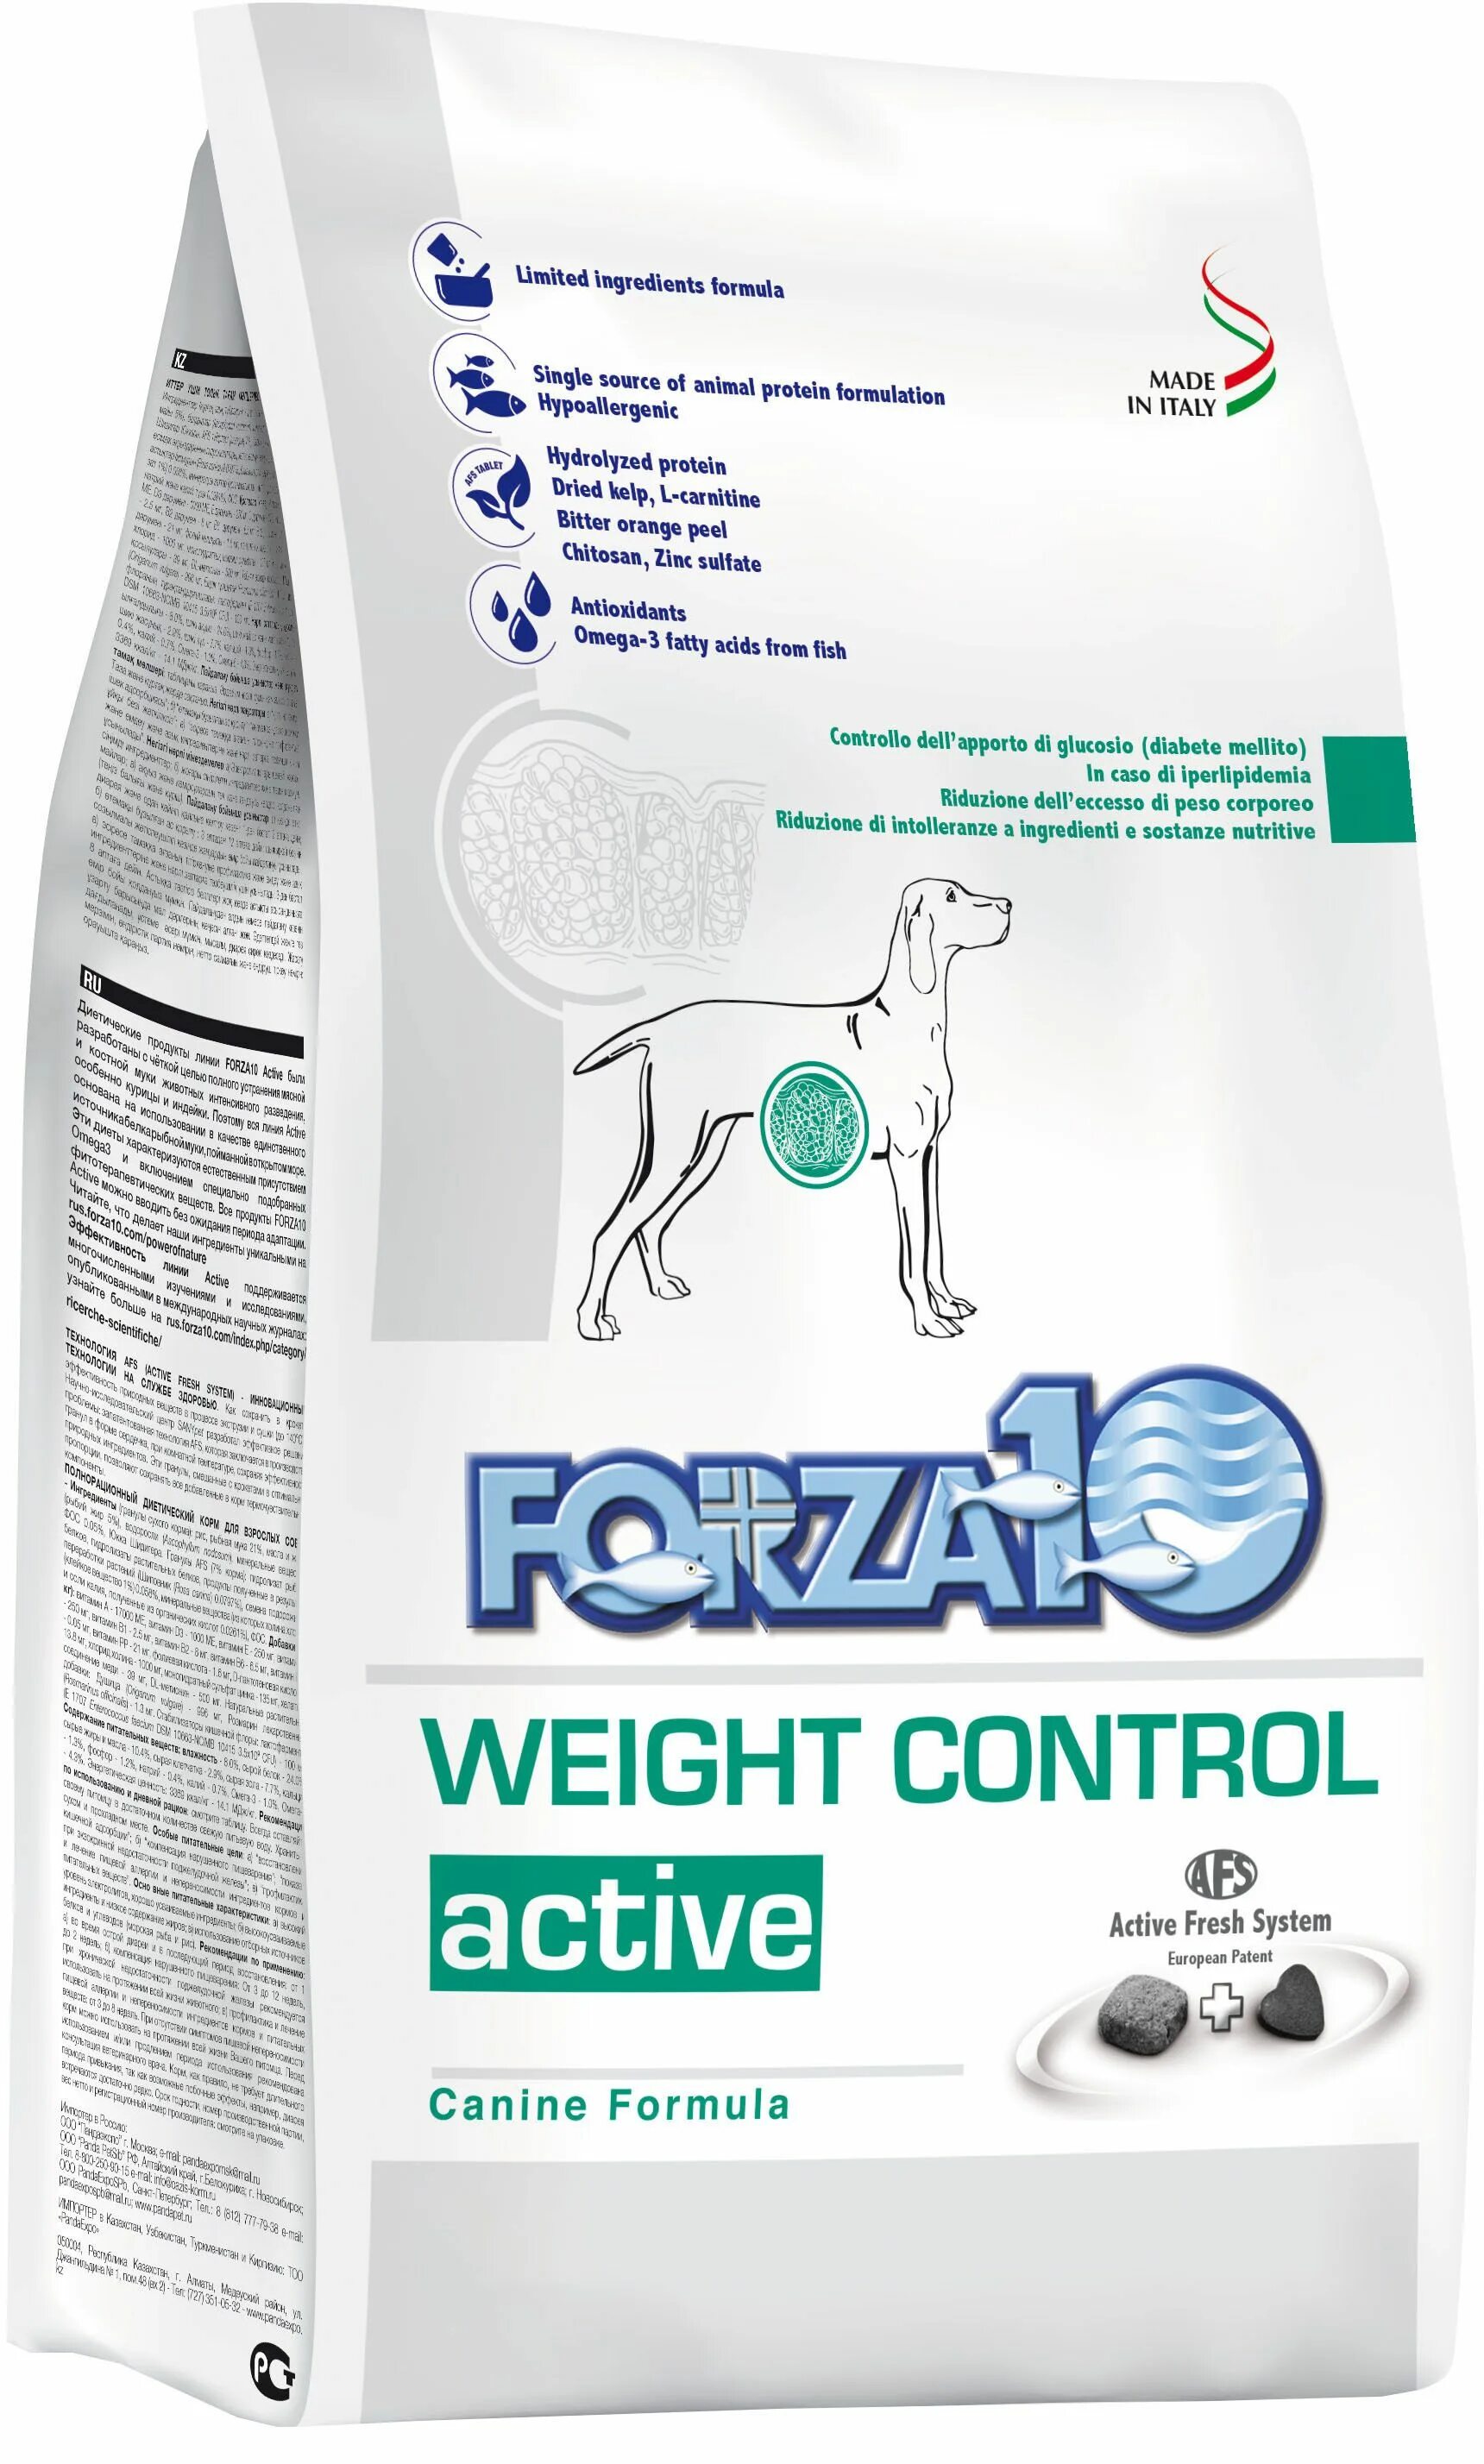 Корм forza10 Active Weight Control для собак. Корм для собак forza10 Oto 4 кг. Forza 10 корм для собак. Forza10 Active line Weight Control canine гранулы.